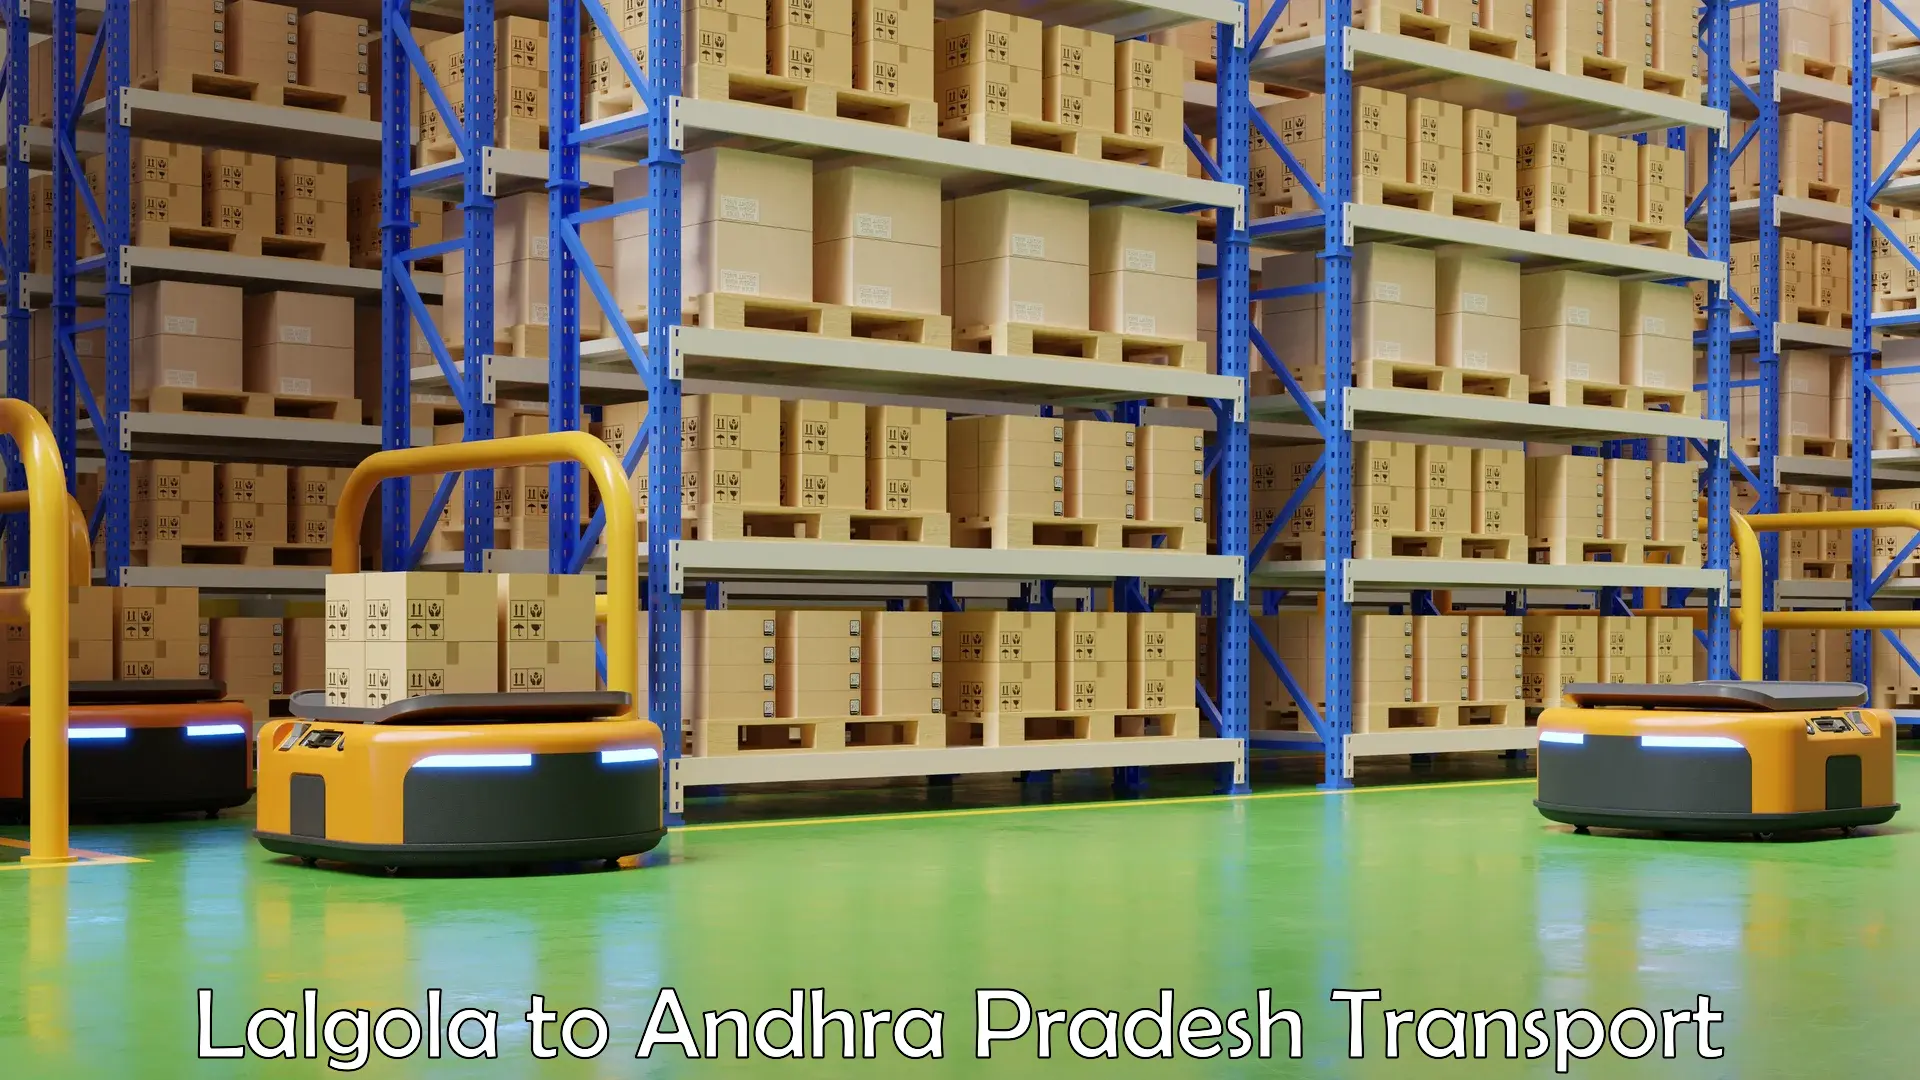 Truck transport companies in India Lalgola to Andhra Pradesh